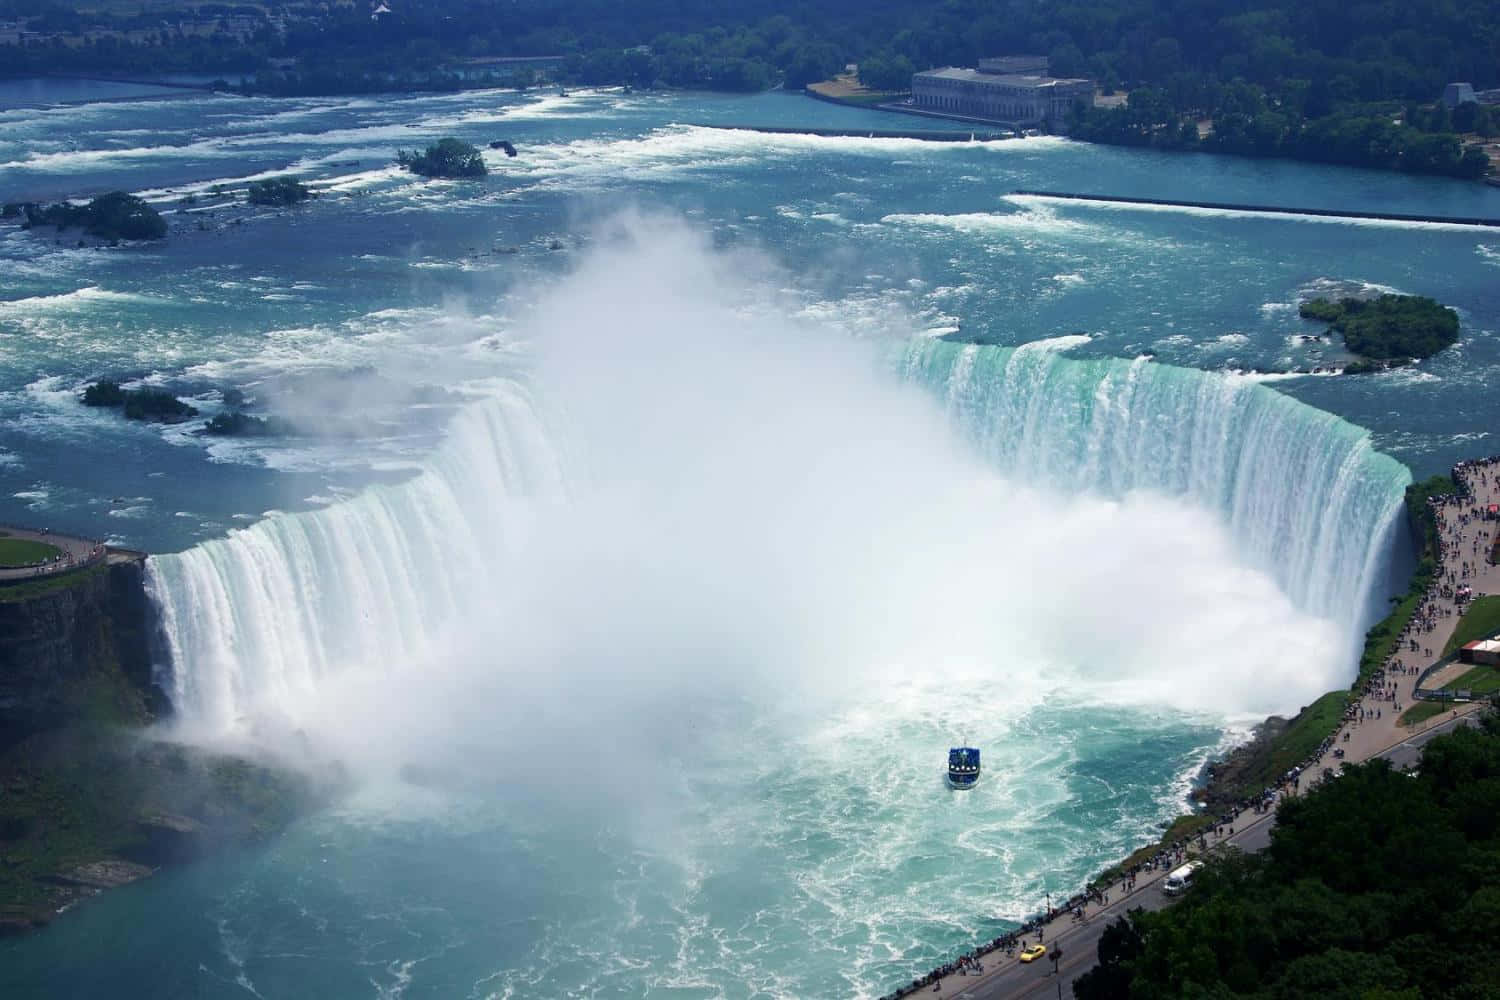 Enjoy the majestic beauty of Niagara Falls